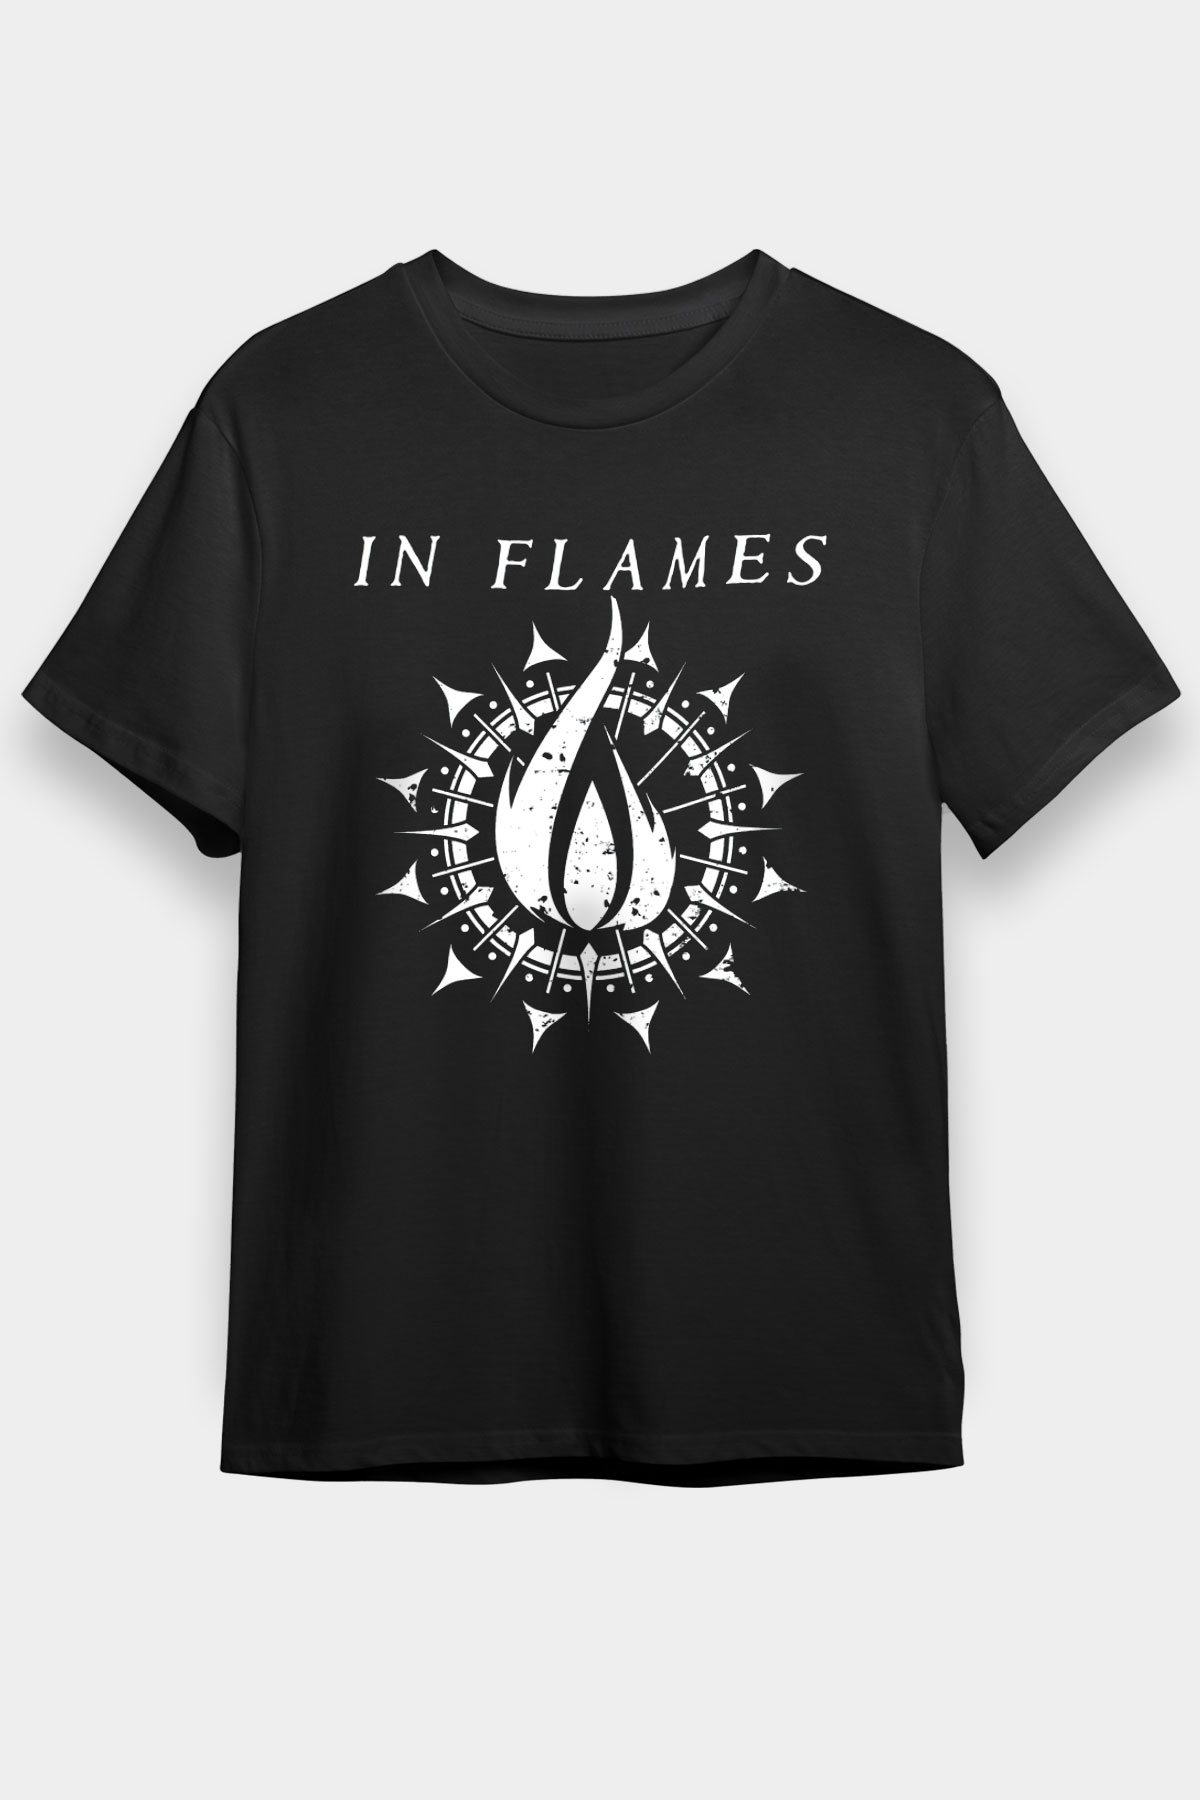 In Flames T shirt,Music Band,Unisex Tshirt 08/